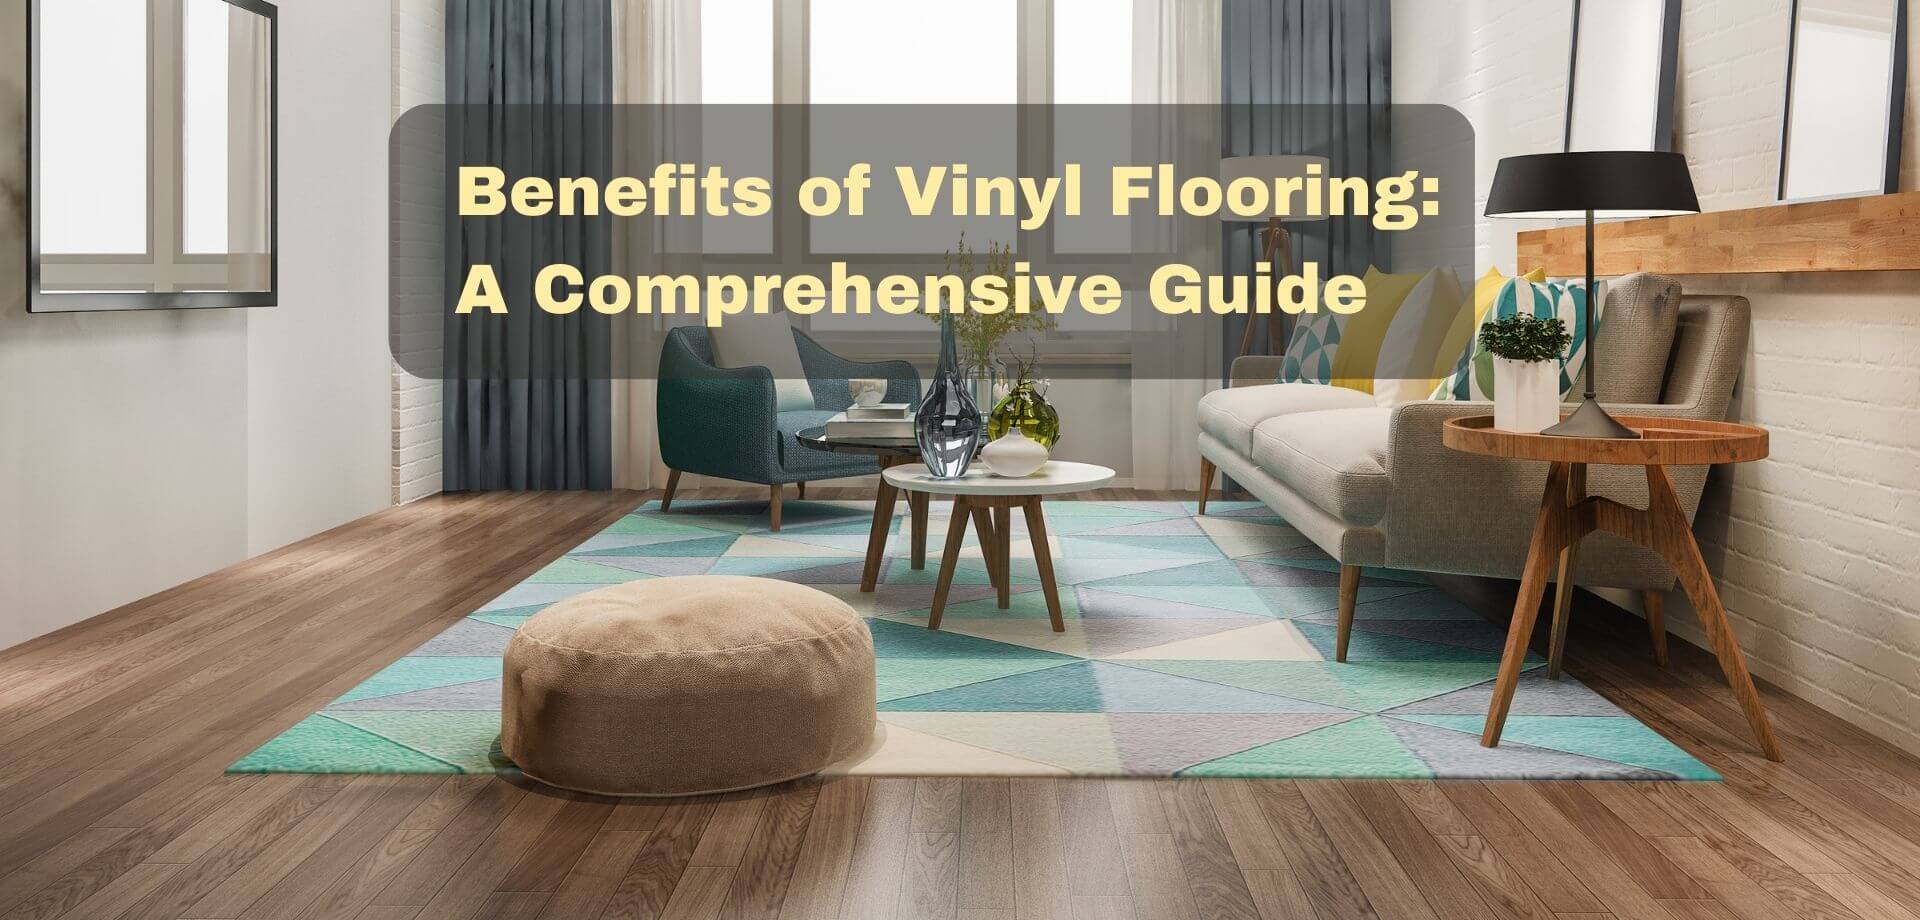 Benefits of Vinyl Flooring: A Comprehensive Guide 